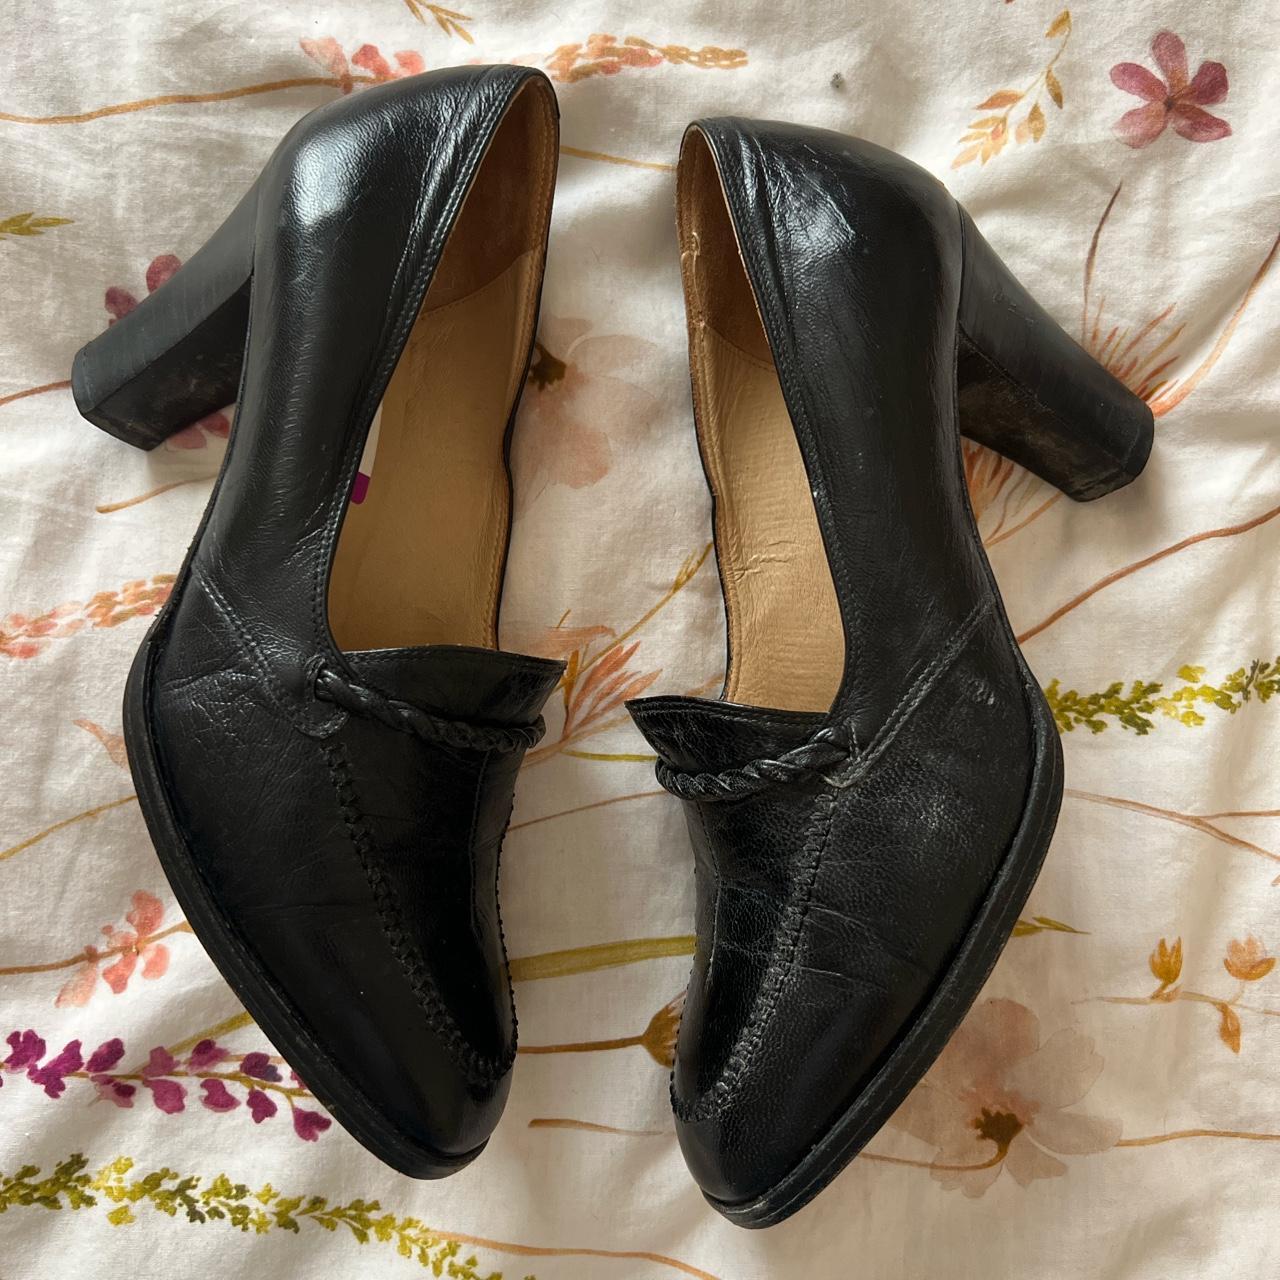 Vintage Italian loafer heels Size 6 Has signs of... - Depop